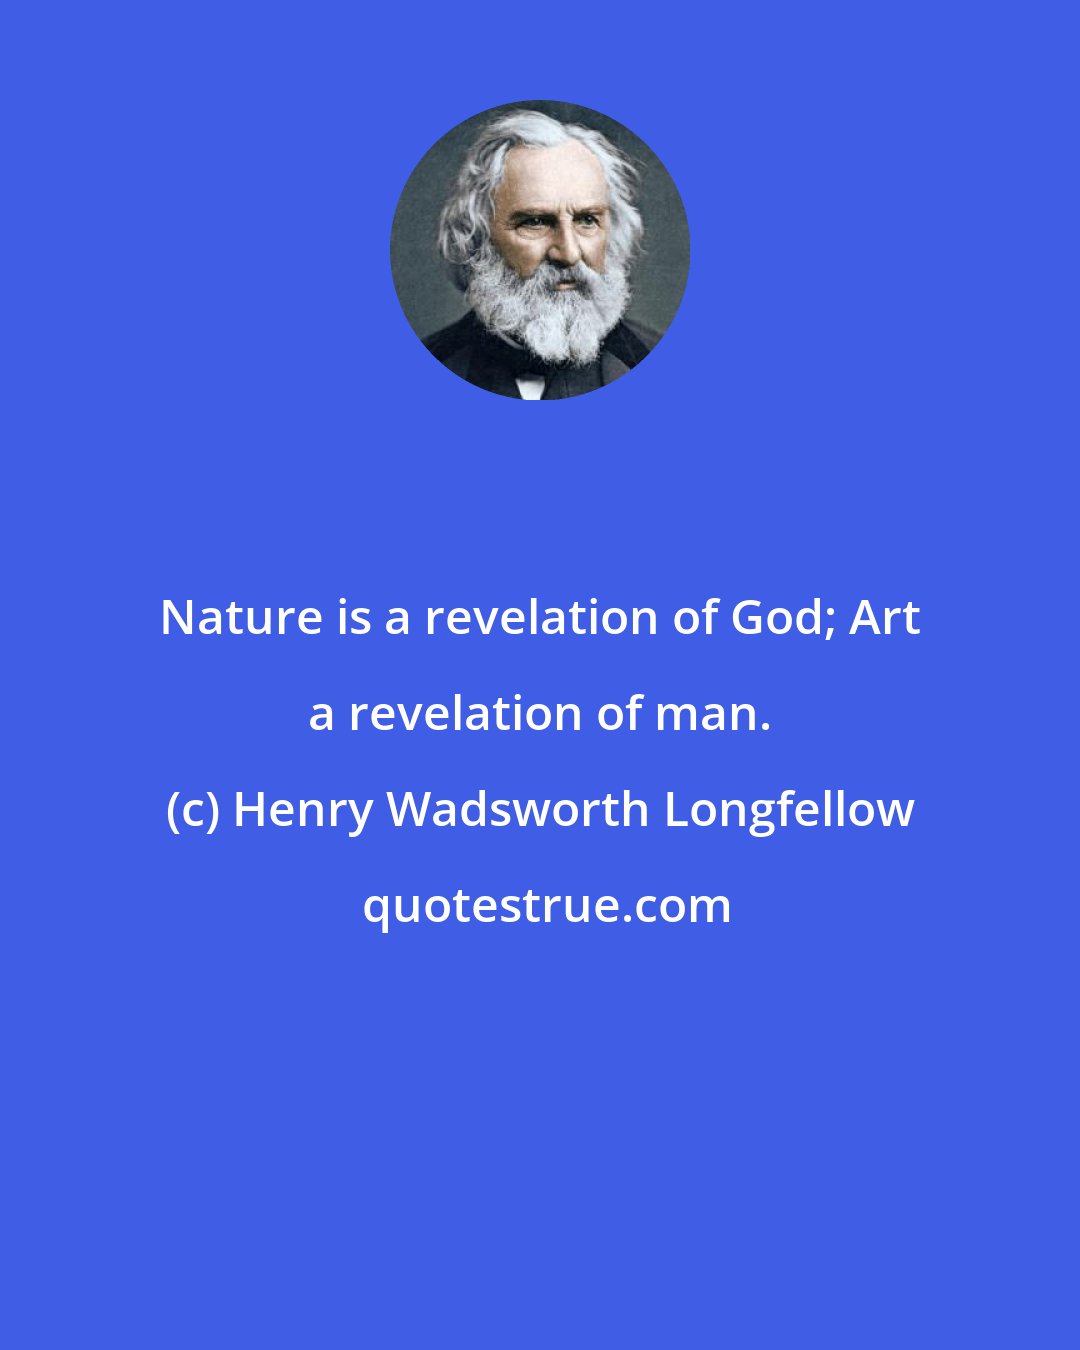 Henry Wadsworth Longfellow: Nature is a revelation of God; Art a revelation of man.